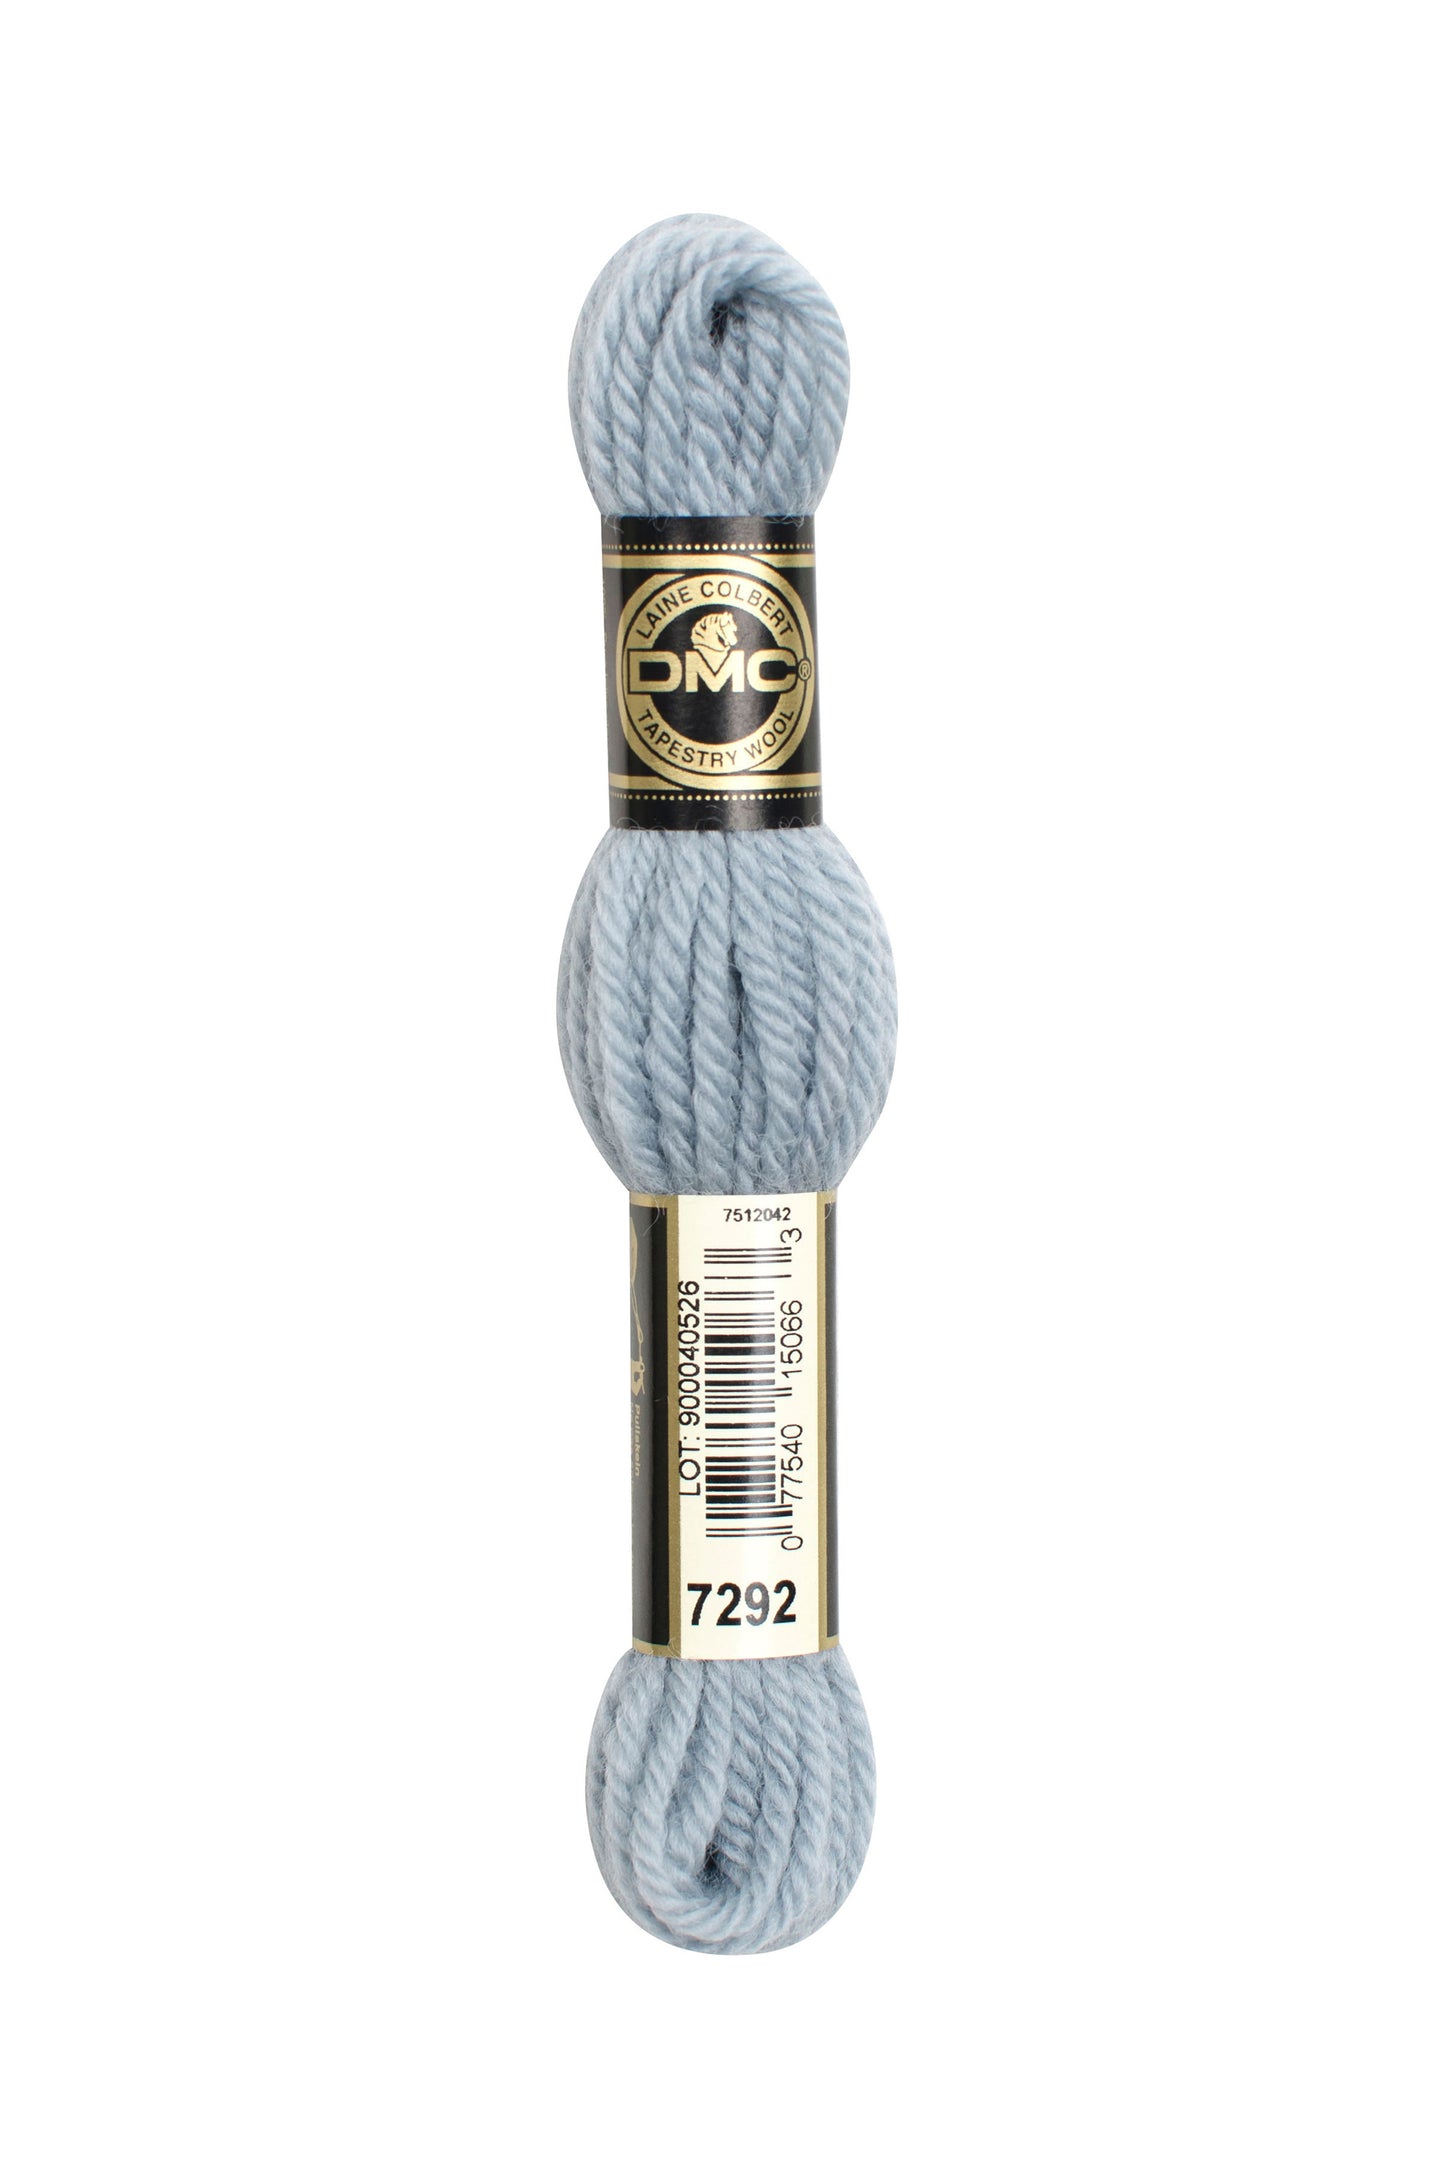 7292 – DMC Tapestry Wool